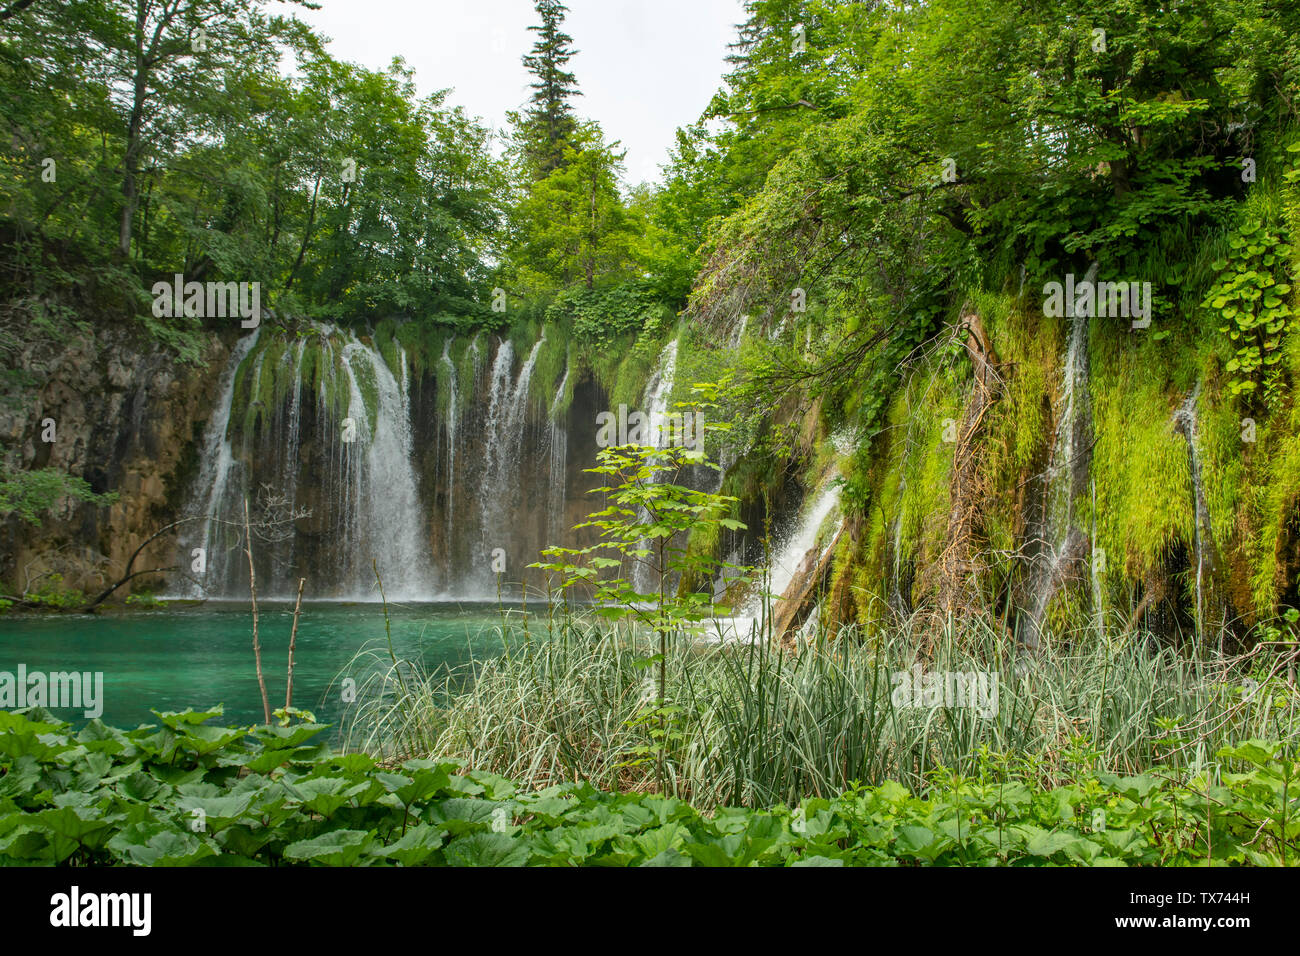 Galovacki Buk Waterfall, Plitvice Lakes National Park, Croatia Stock Photo